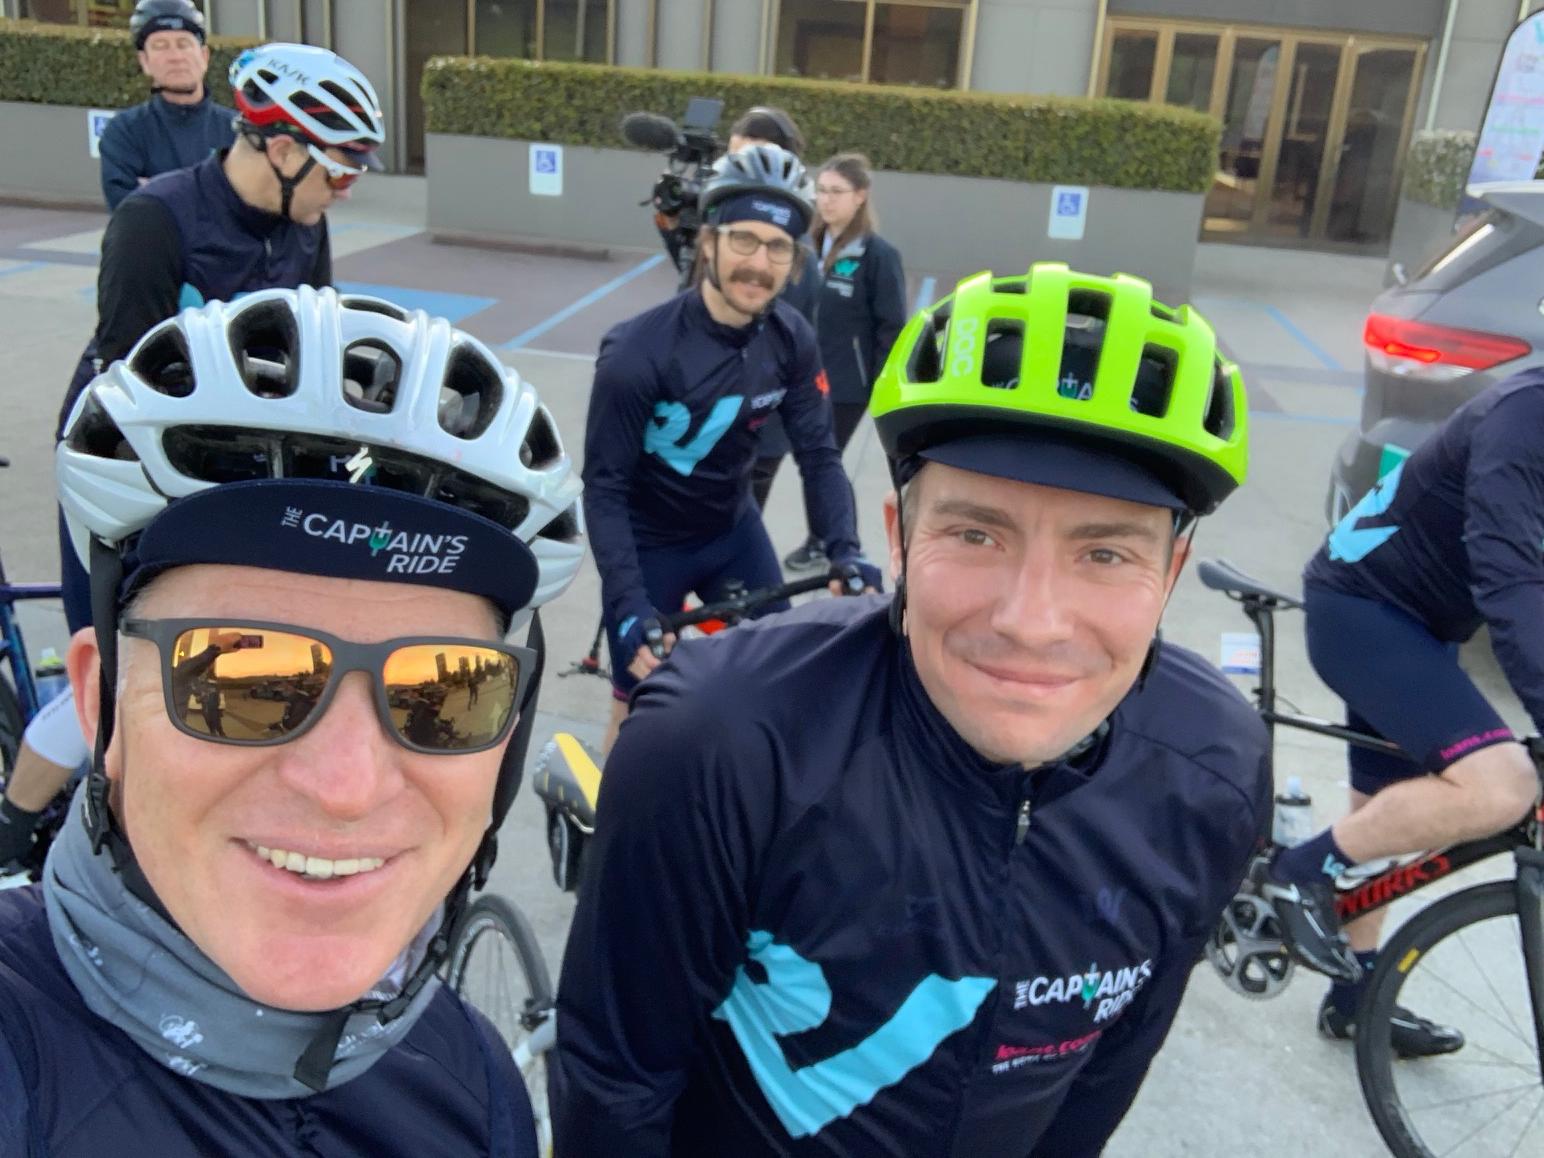 VHR Award-Winning Recruitment Company Charity Cycle Ride